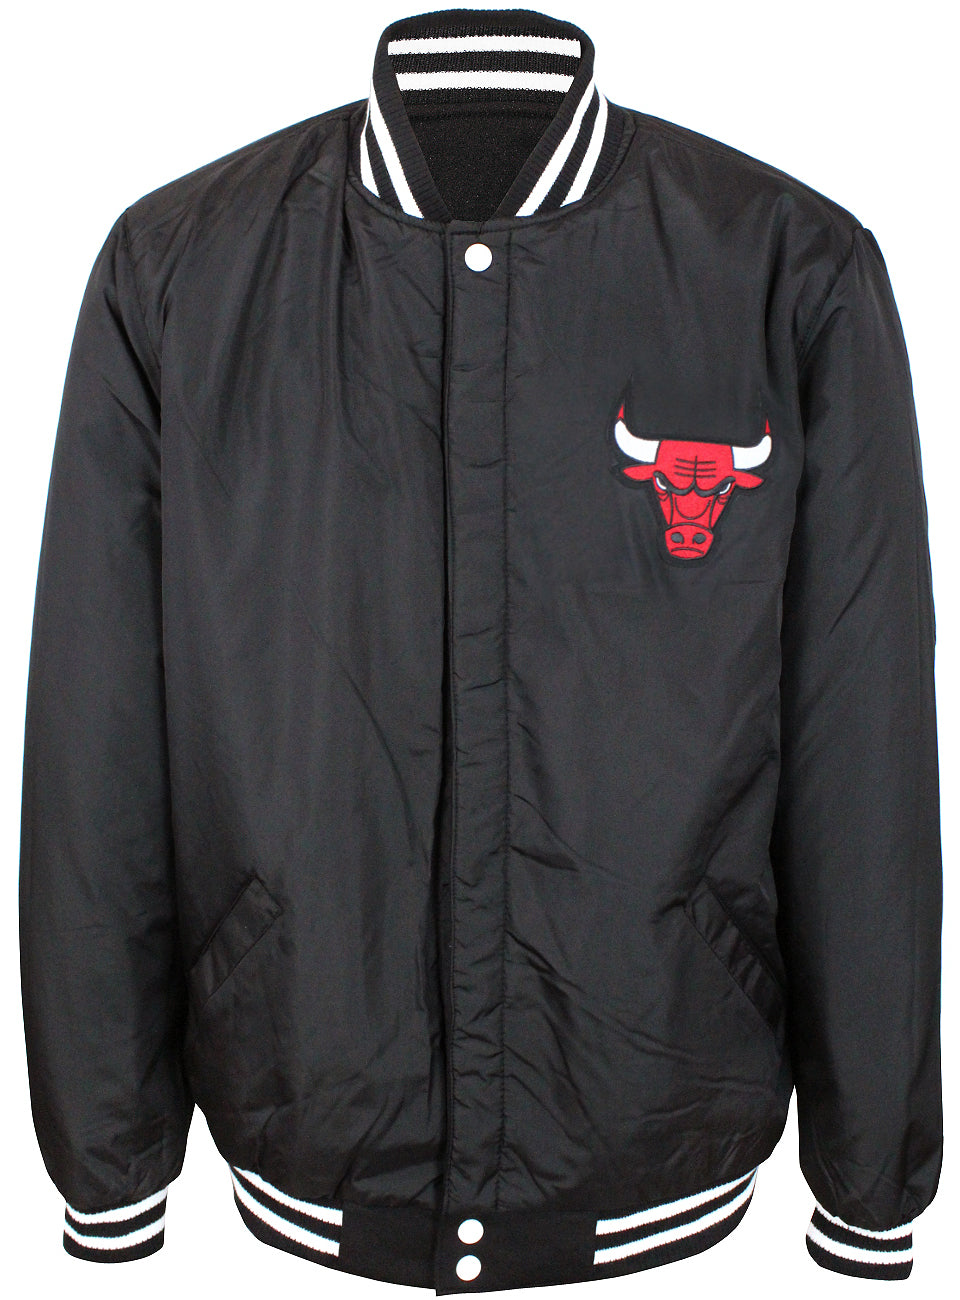 Chicago Bulls JH Design Wool & Leather Reversible Varsity Jacket